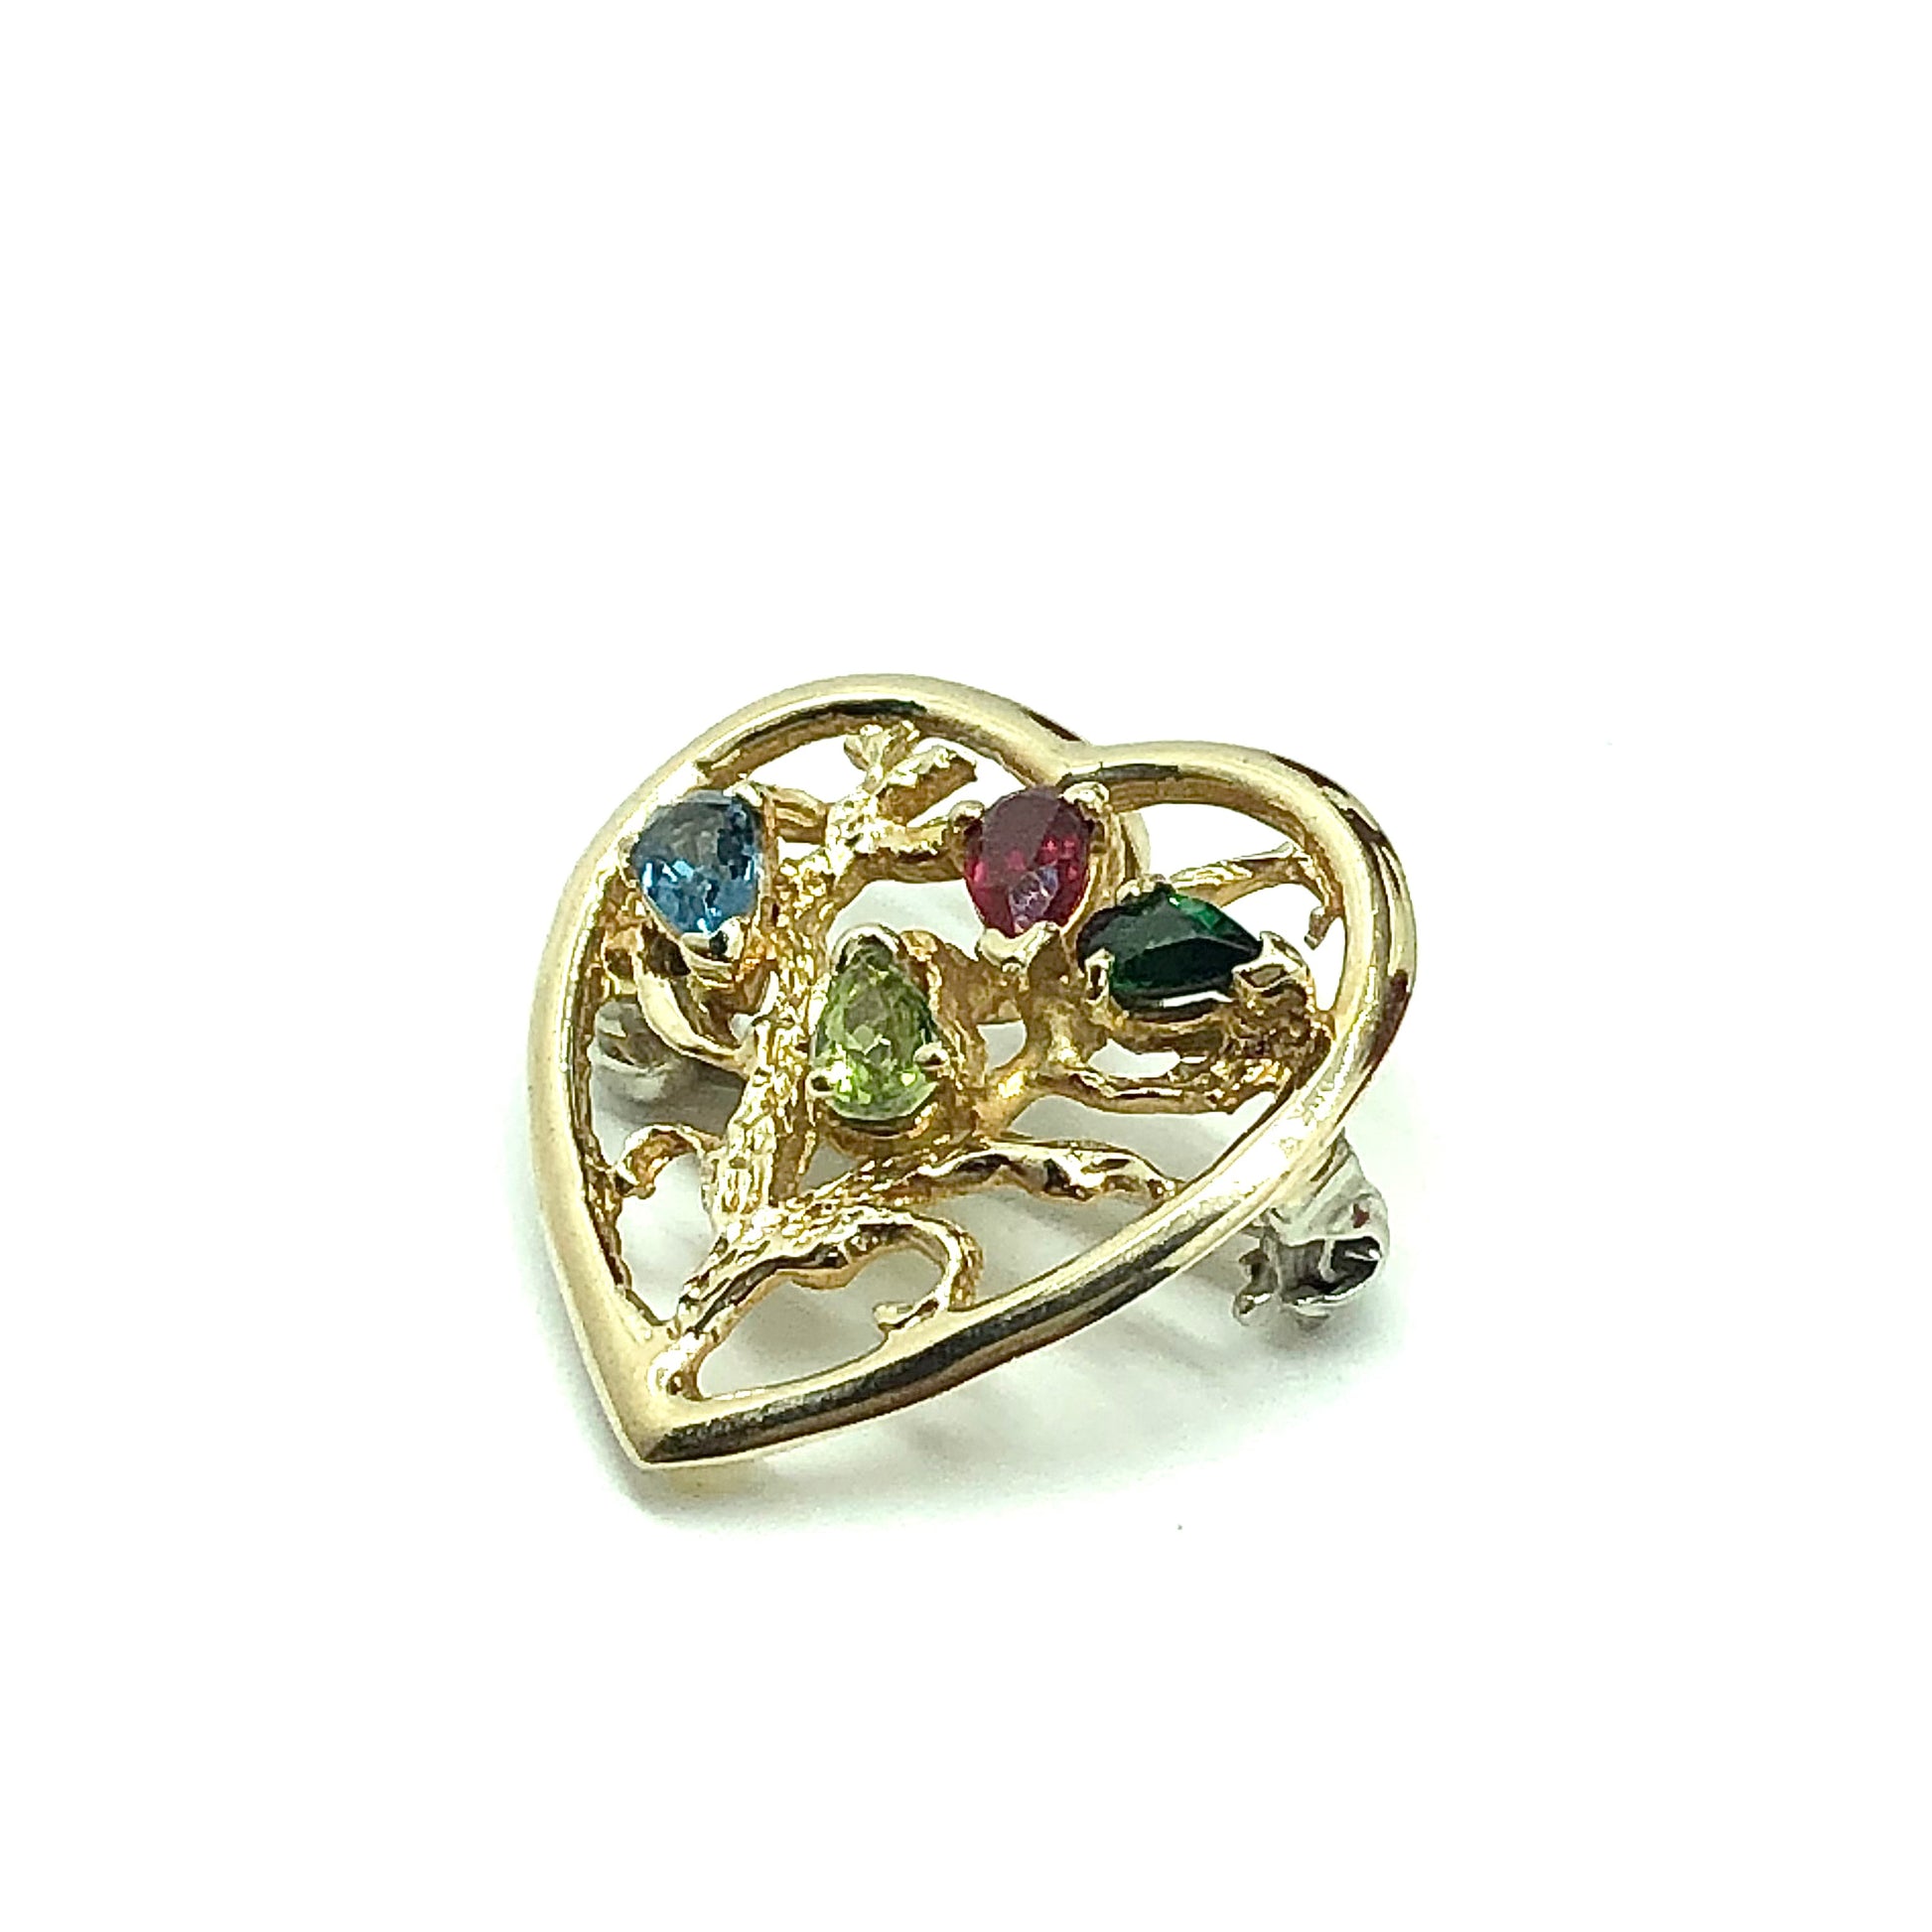 DYNWAVE Leaf Shape Brooch, Collar Pin, Brooch Flower, Pins Lapel Pin, Brooch Jewelery for Women, Gift Brown, Women's, Size: As described